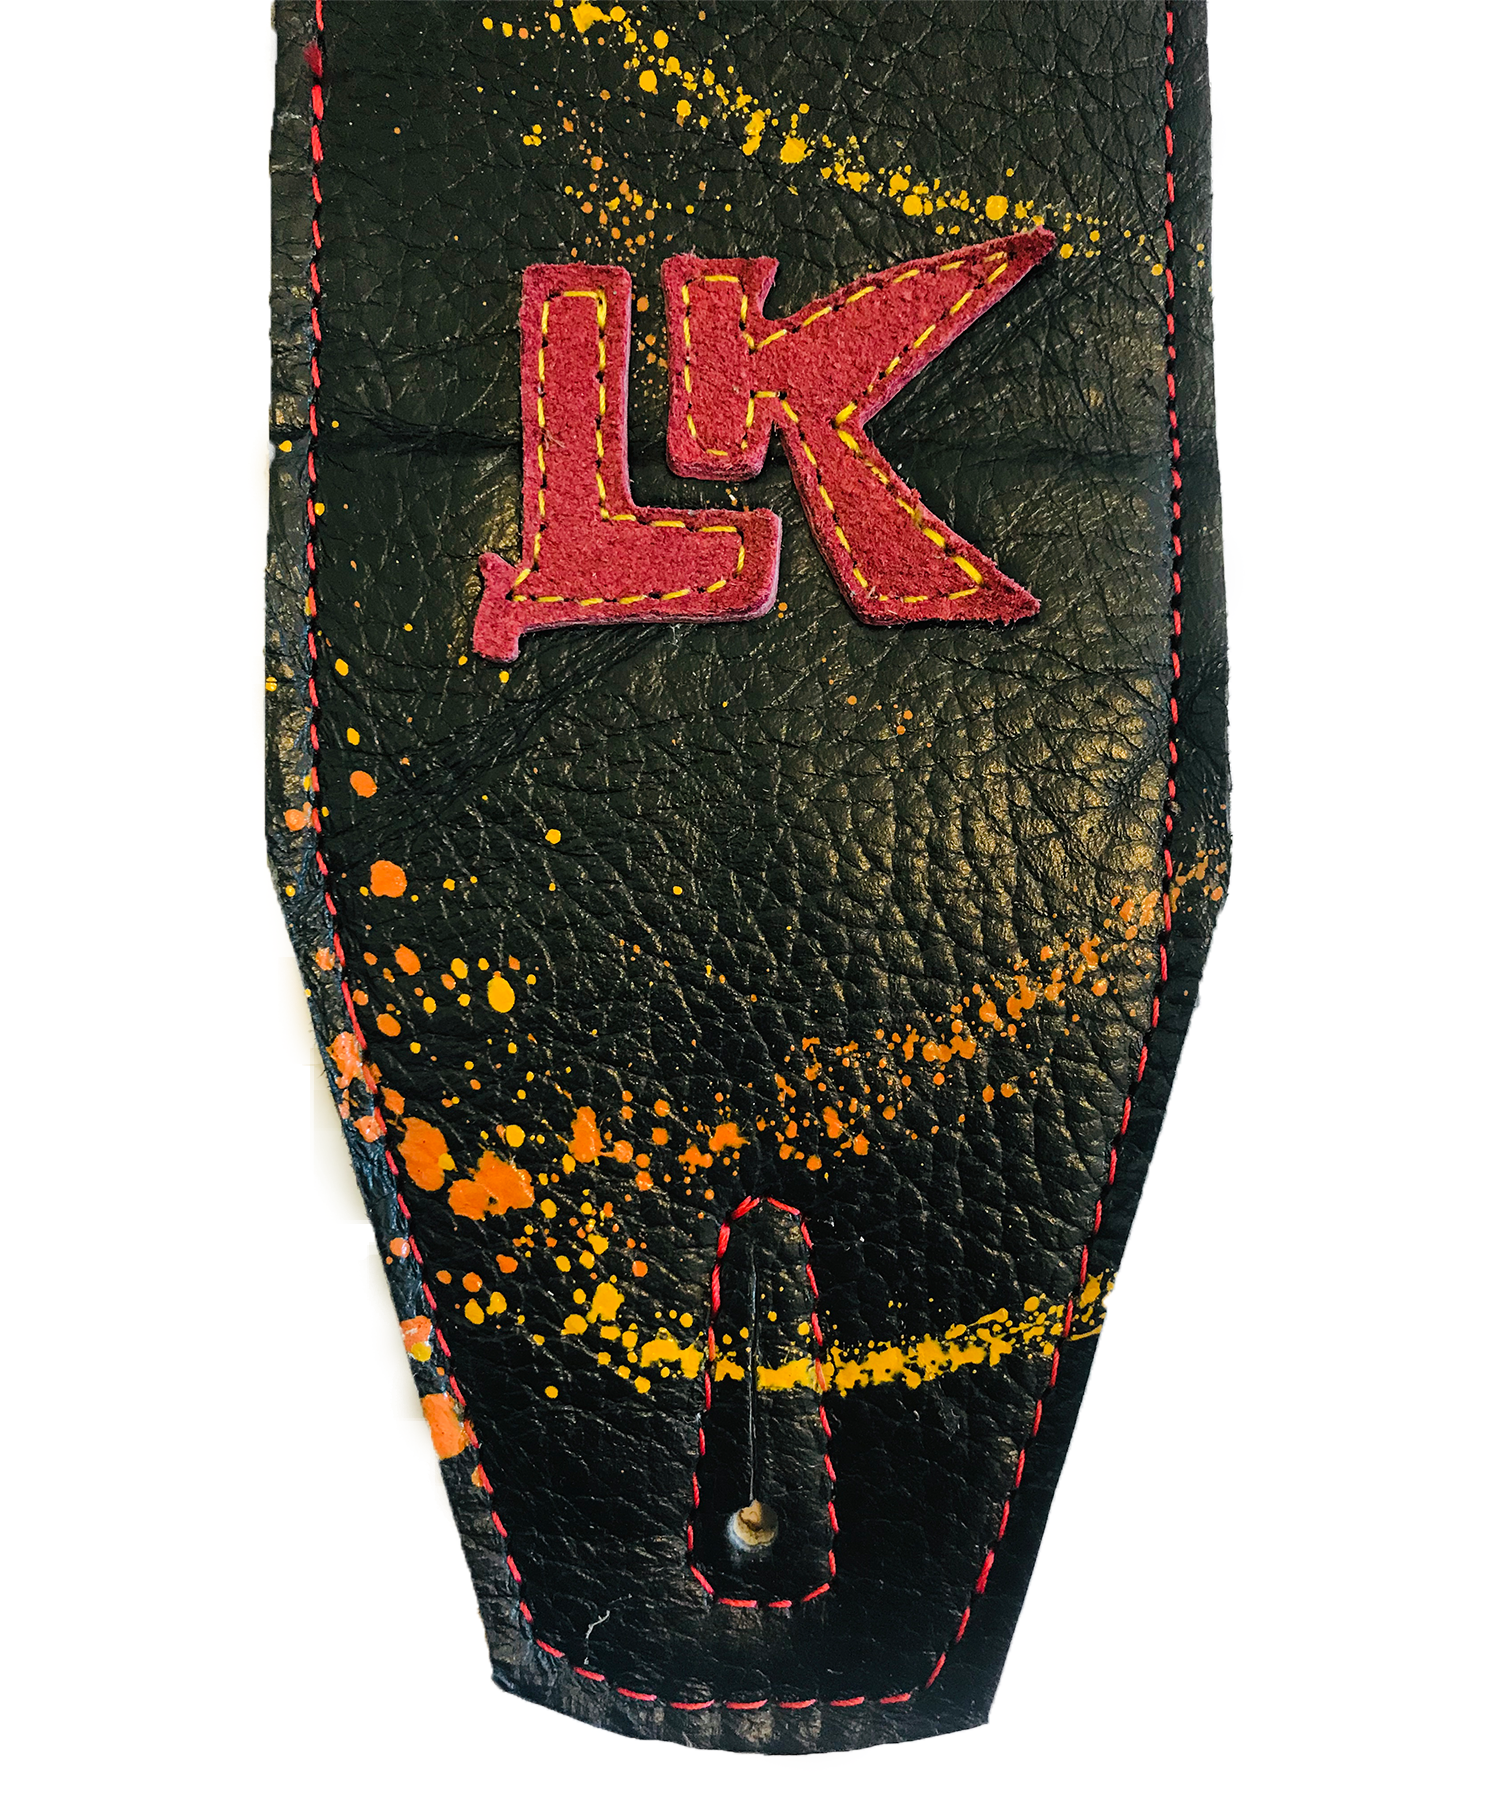 LK Black With Multi Paint Splatter Strap